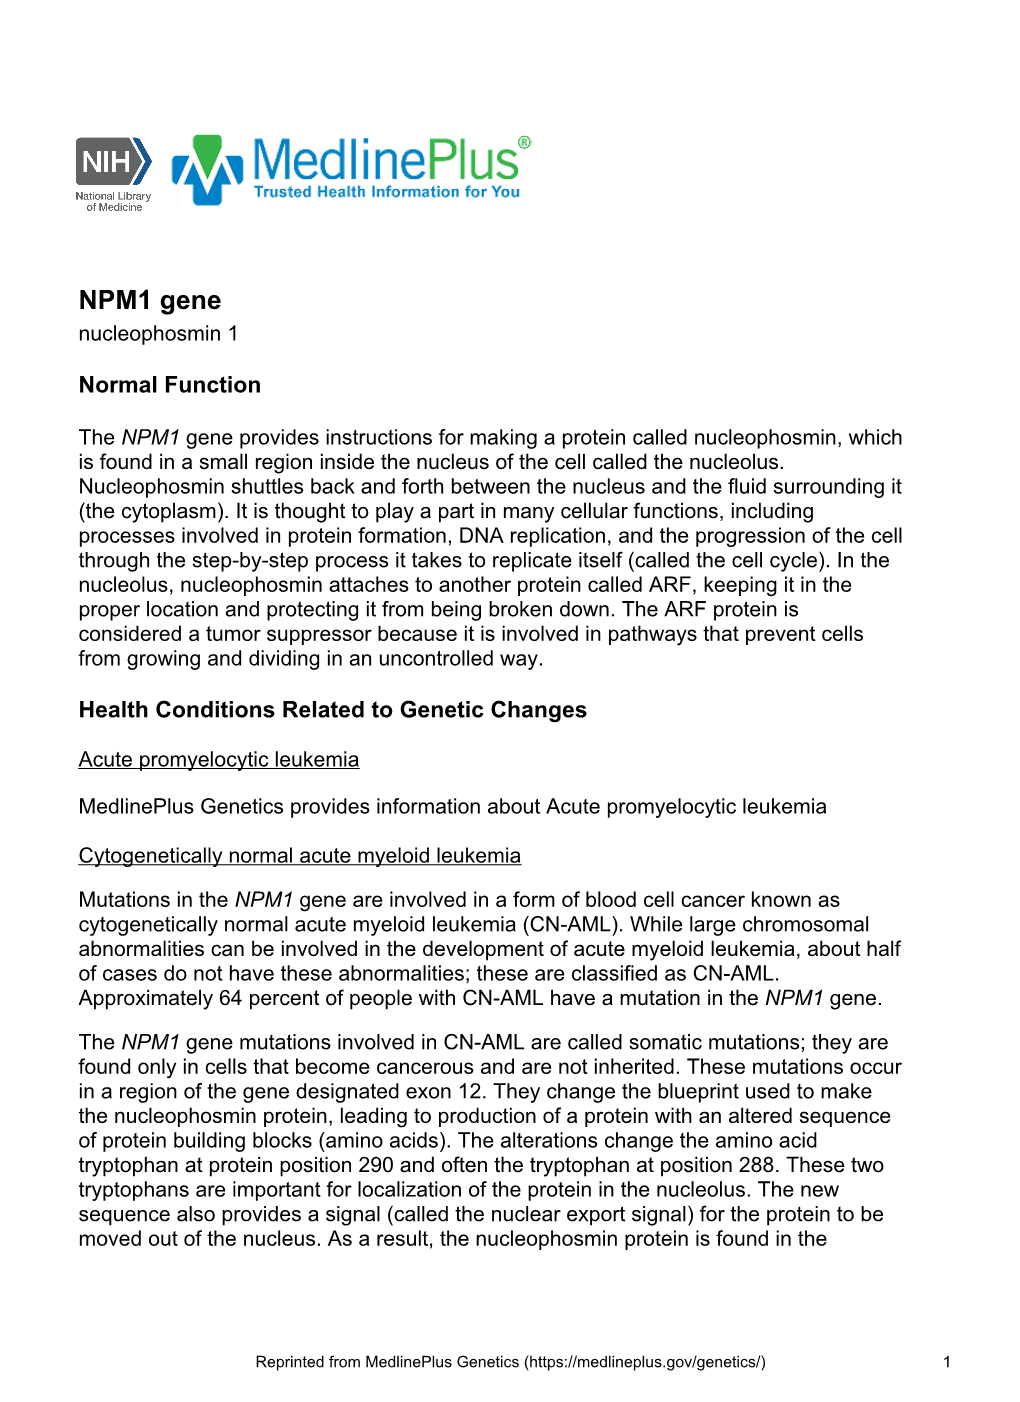 NPM1 Gene Nucleophosmin 1